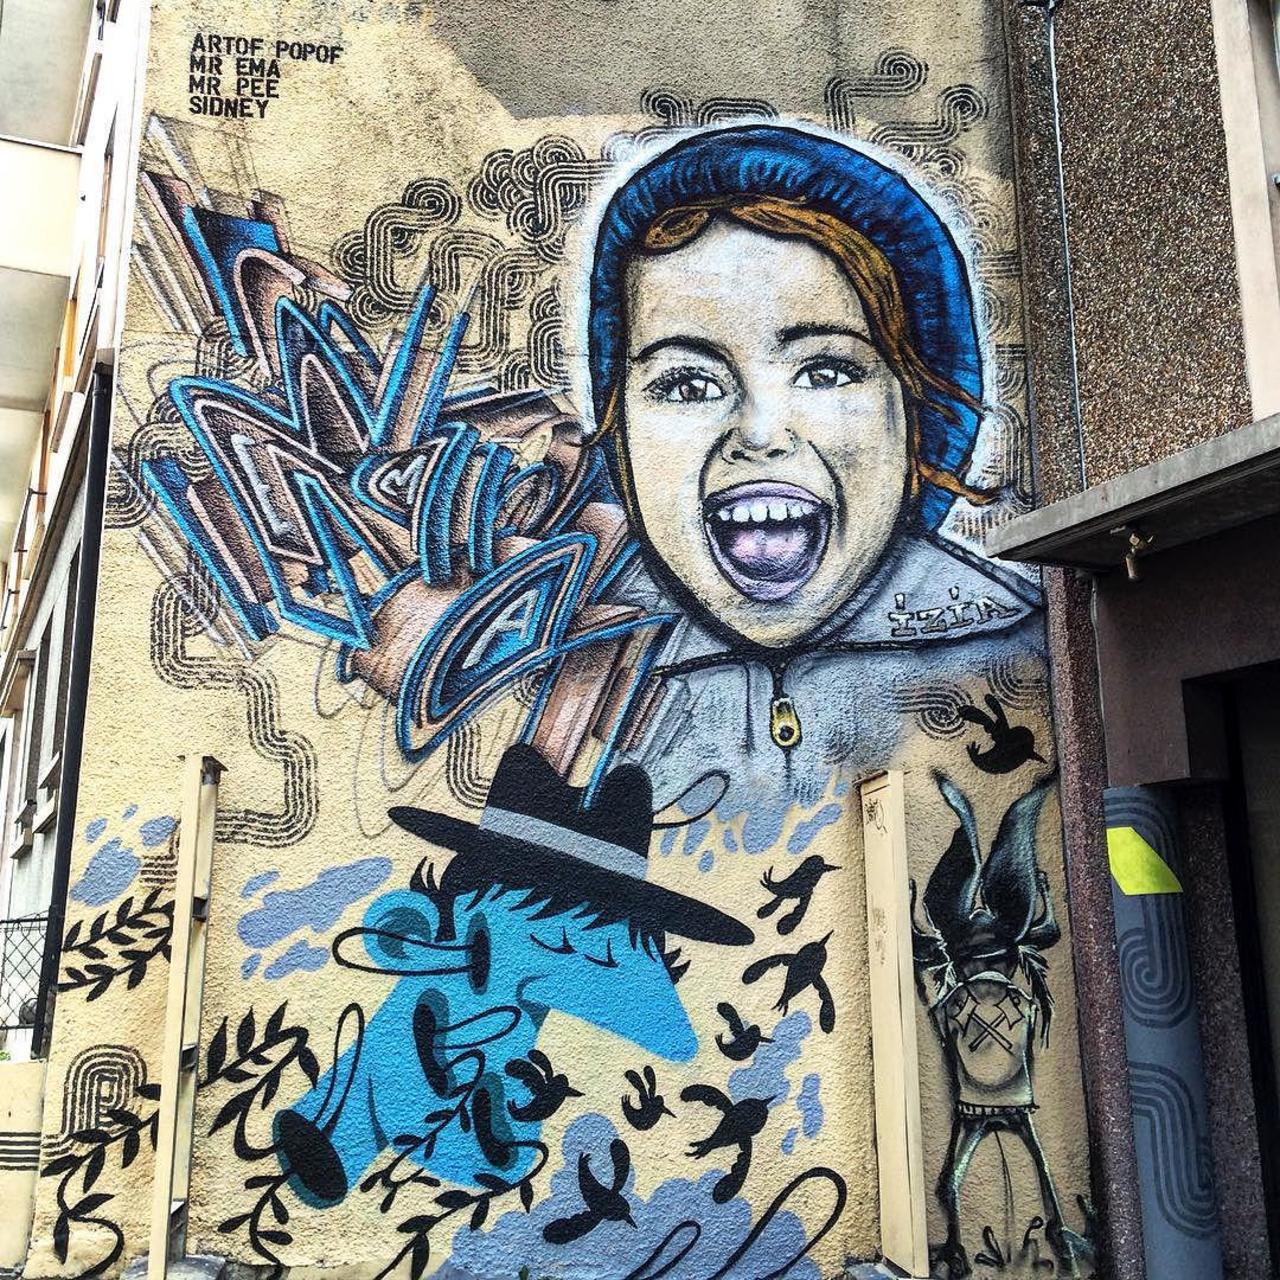 circumjacent_fr: #Paris #graffiti photo by julosteart http://ift.tt/1iBSIje #StreetArt http://t.co/Yb025zm41d